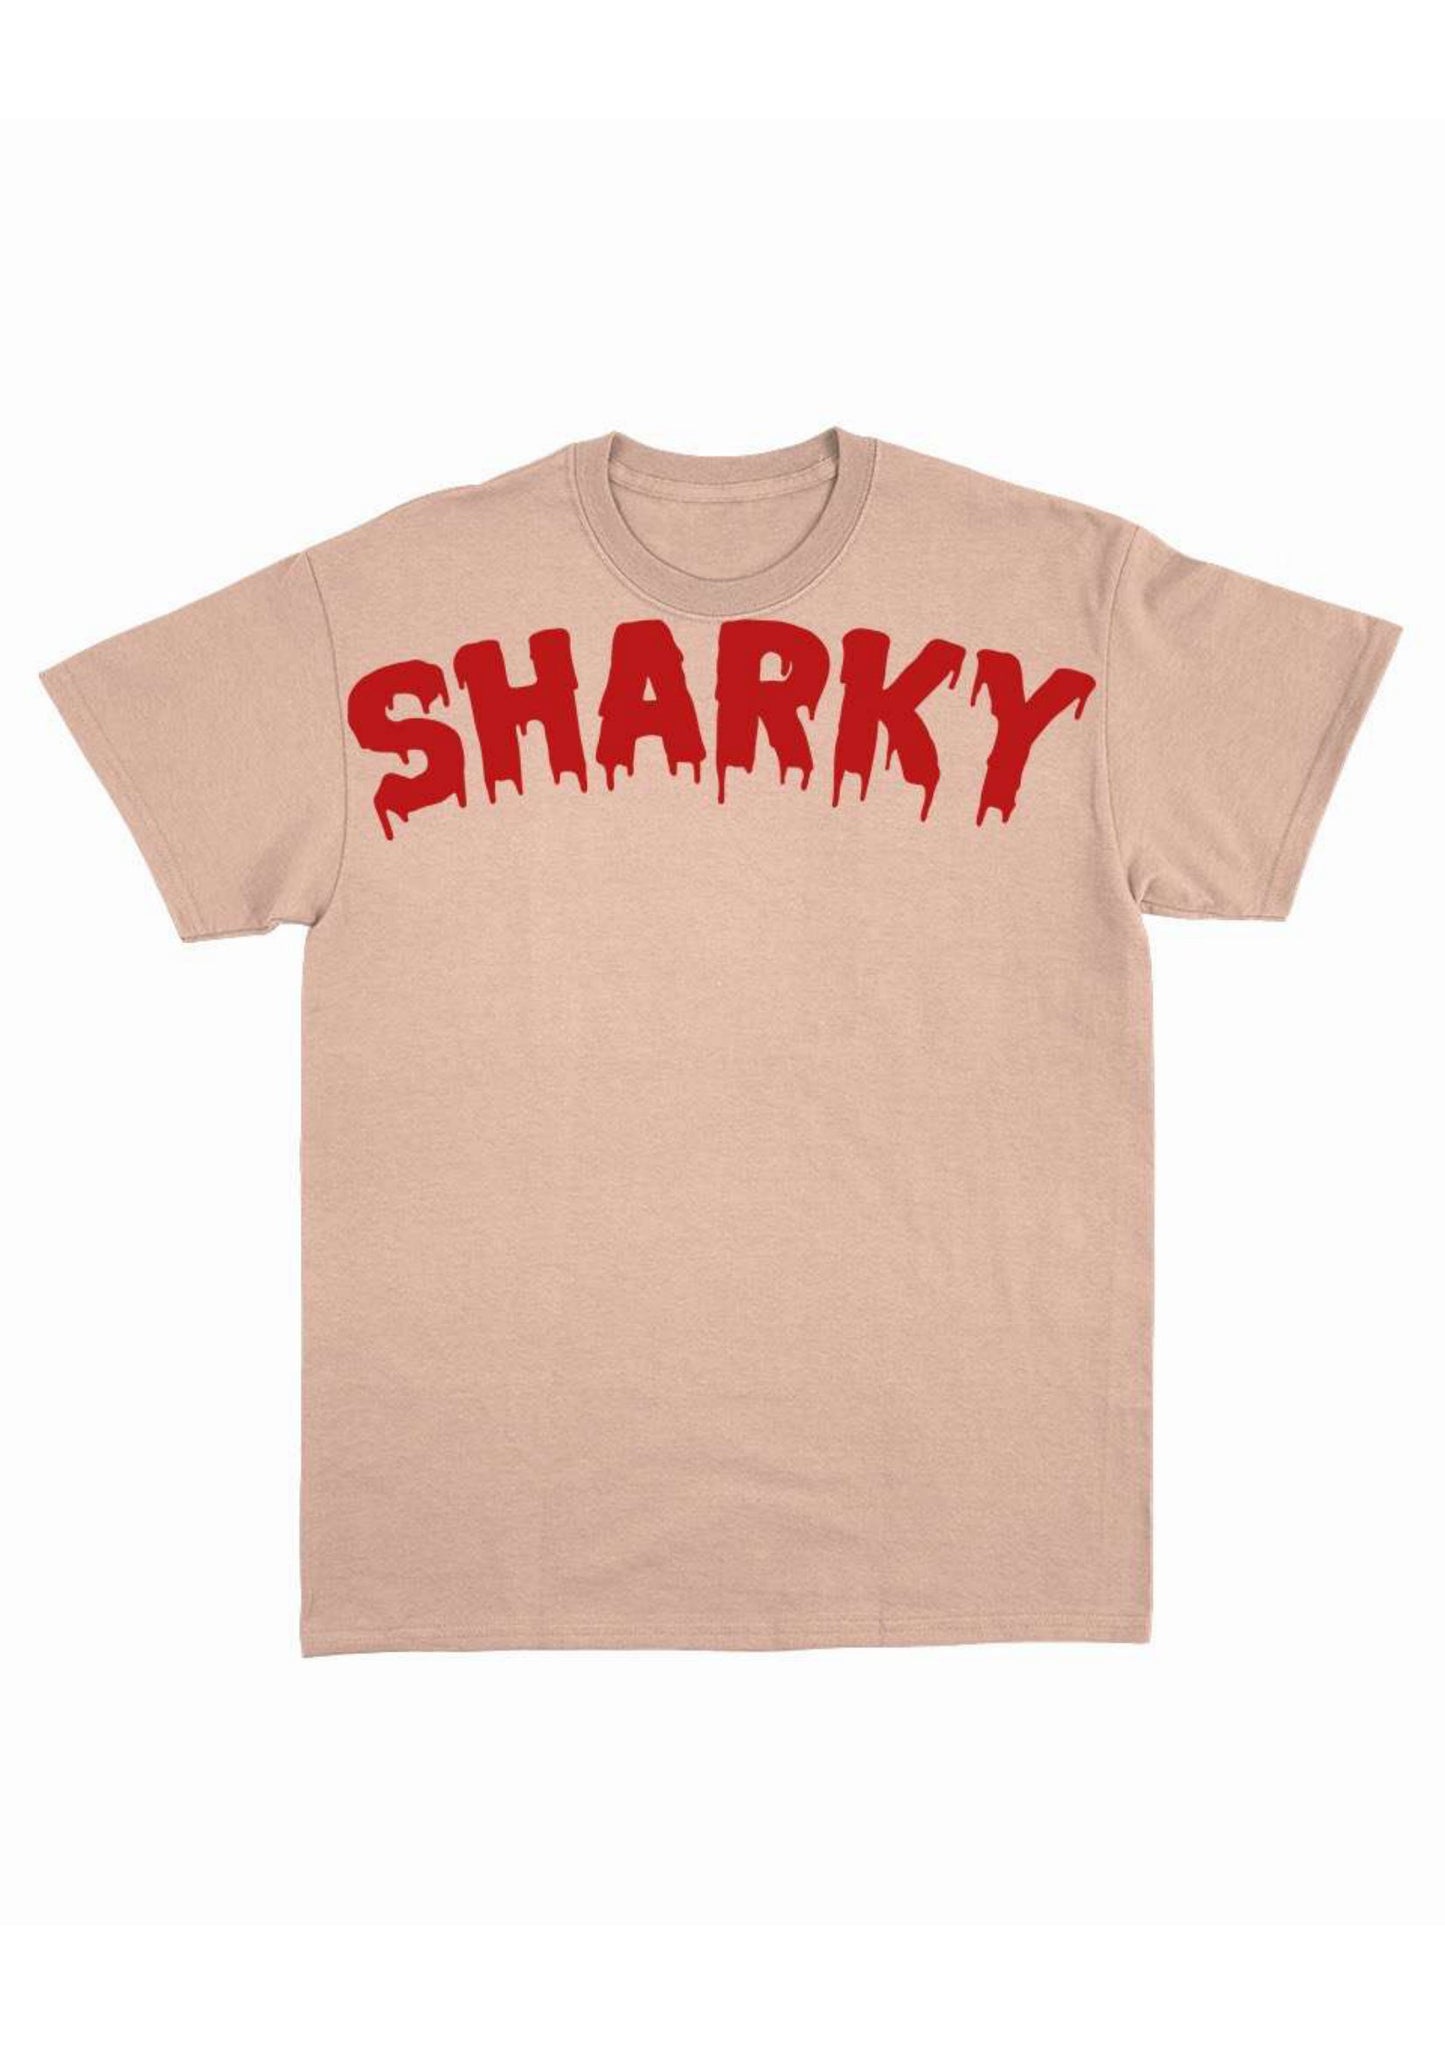 T-shirt Sharky - only sign